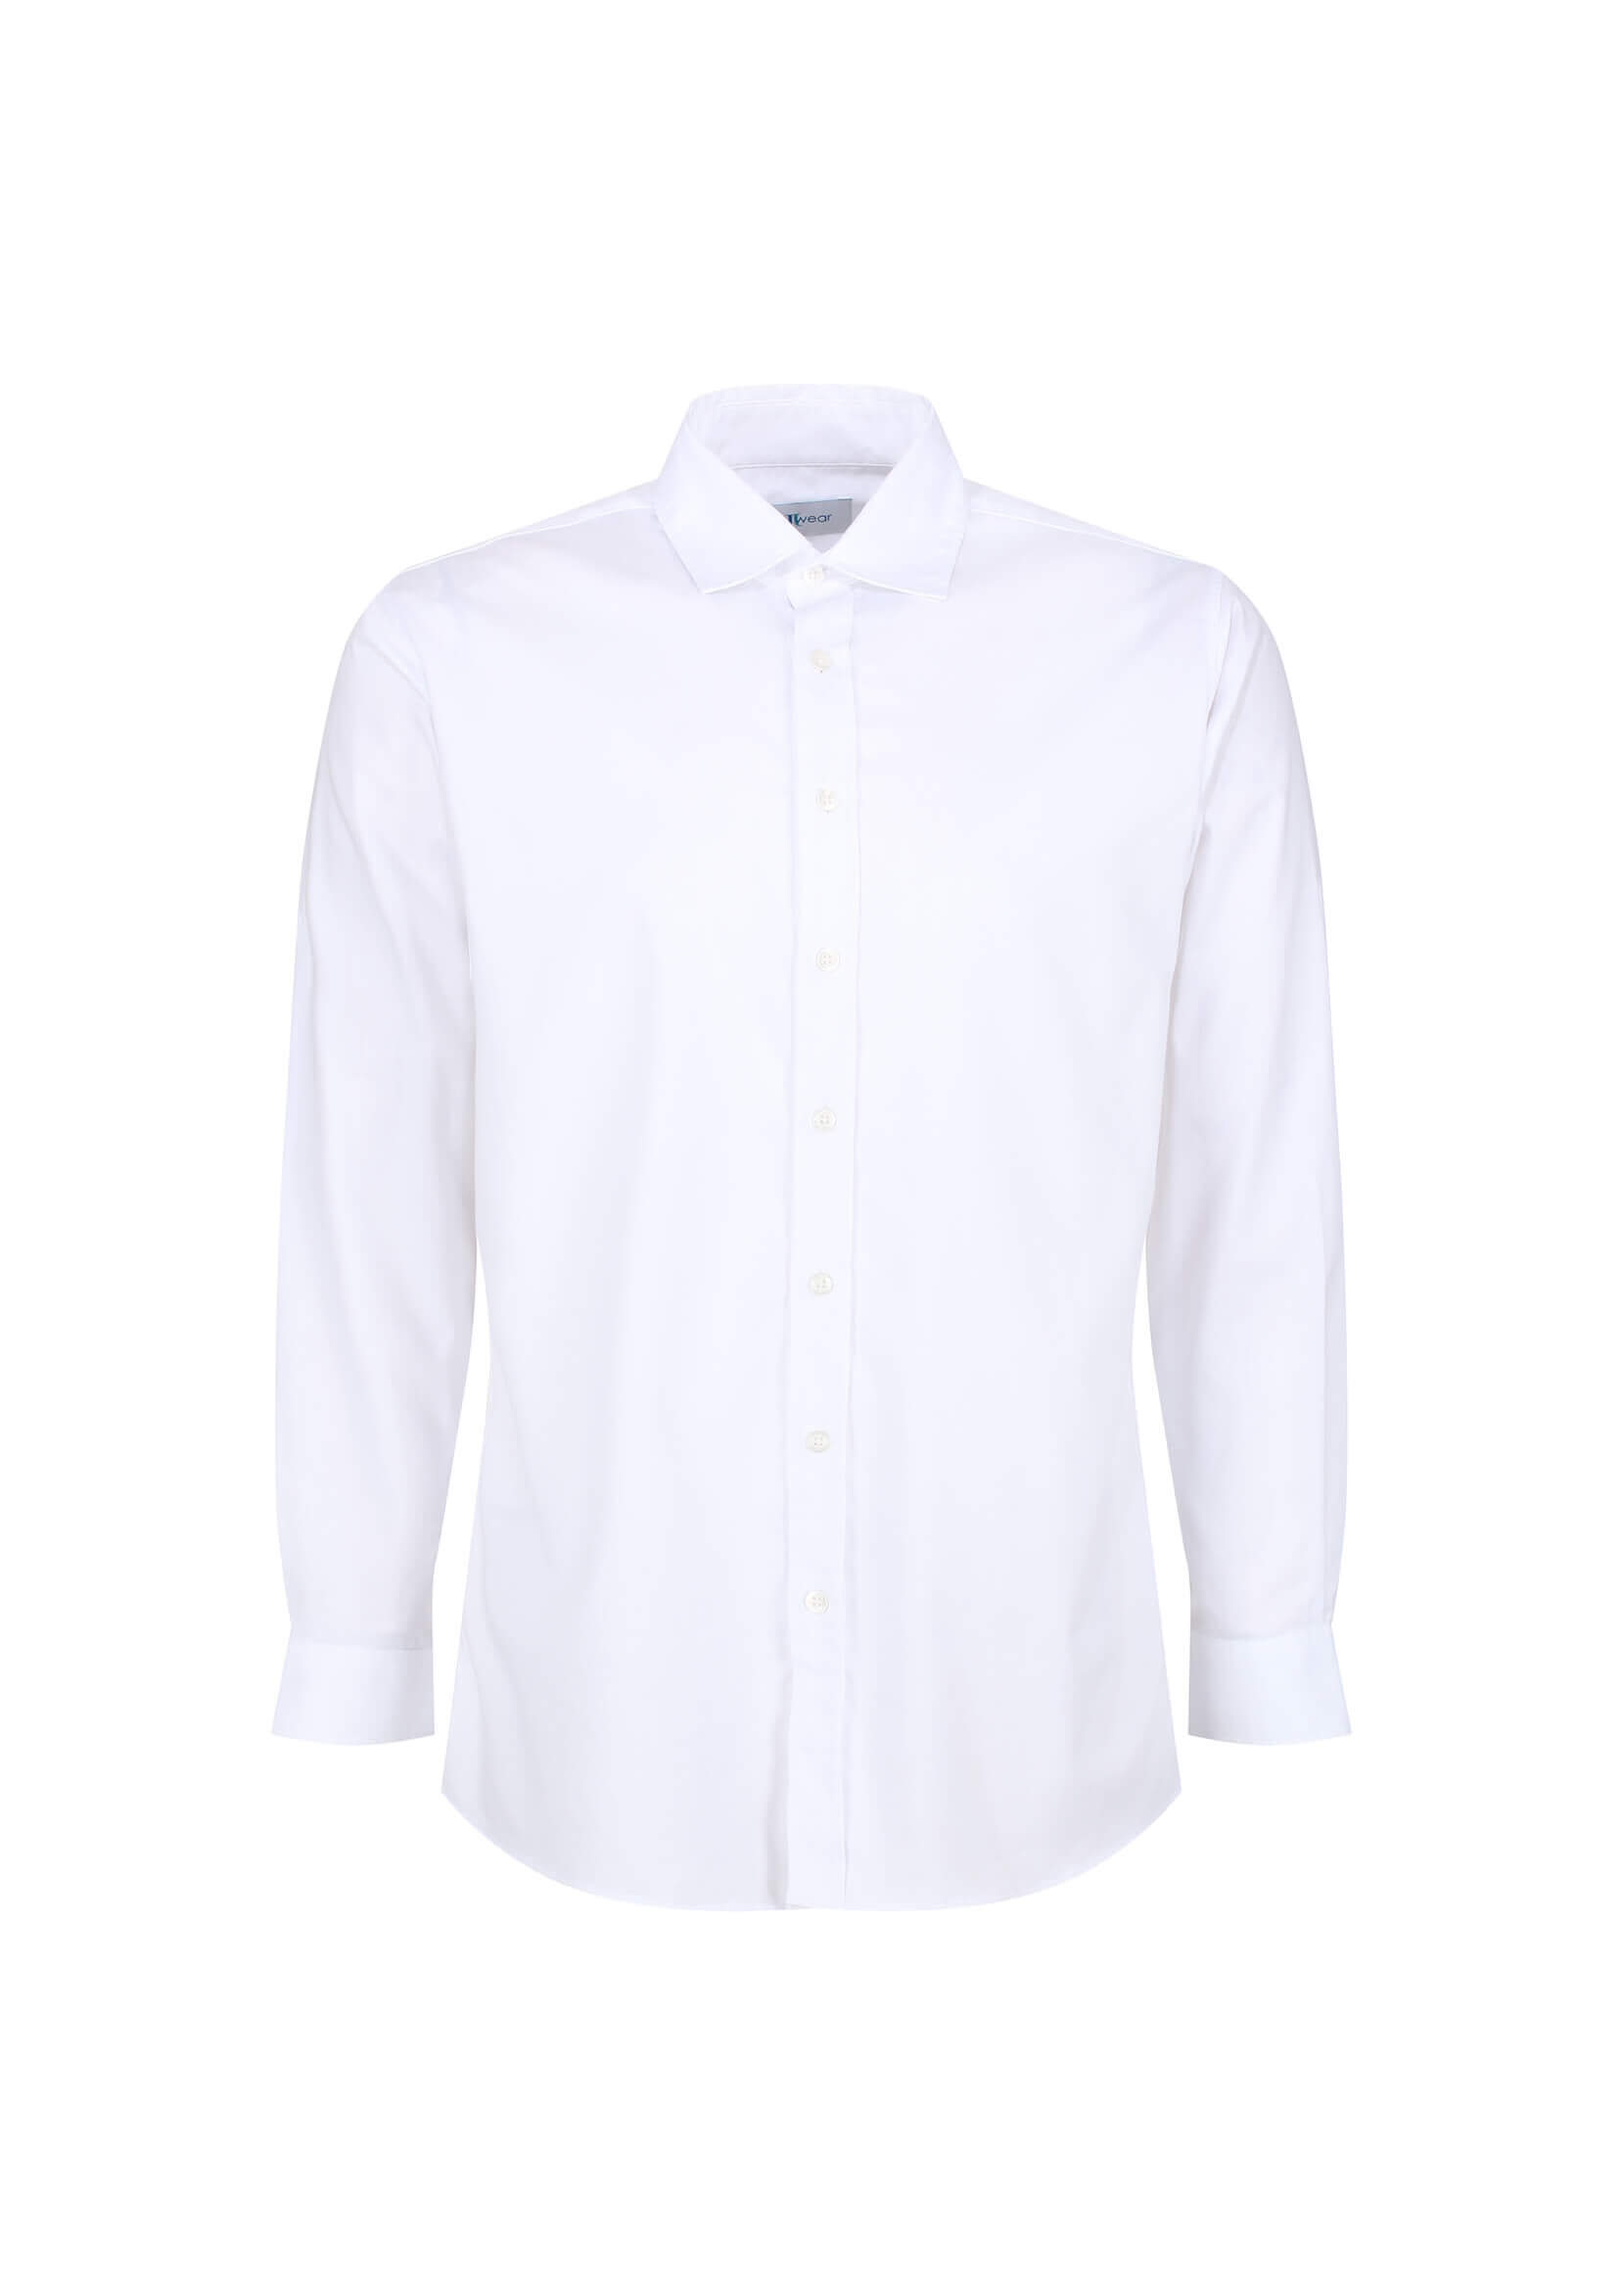 Polman Shirt | Sustainable Hotel Uniforms | J-Wear by Jalin Design